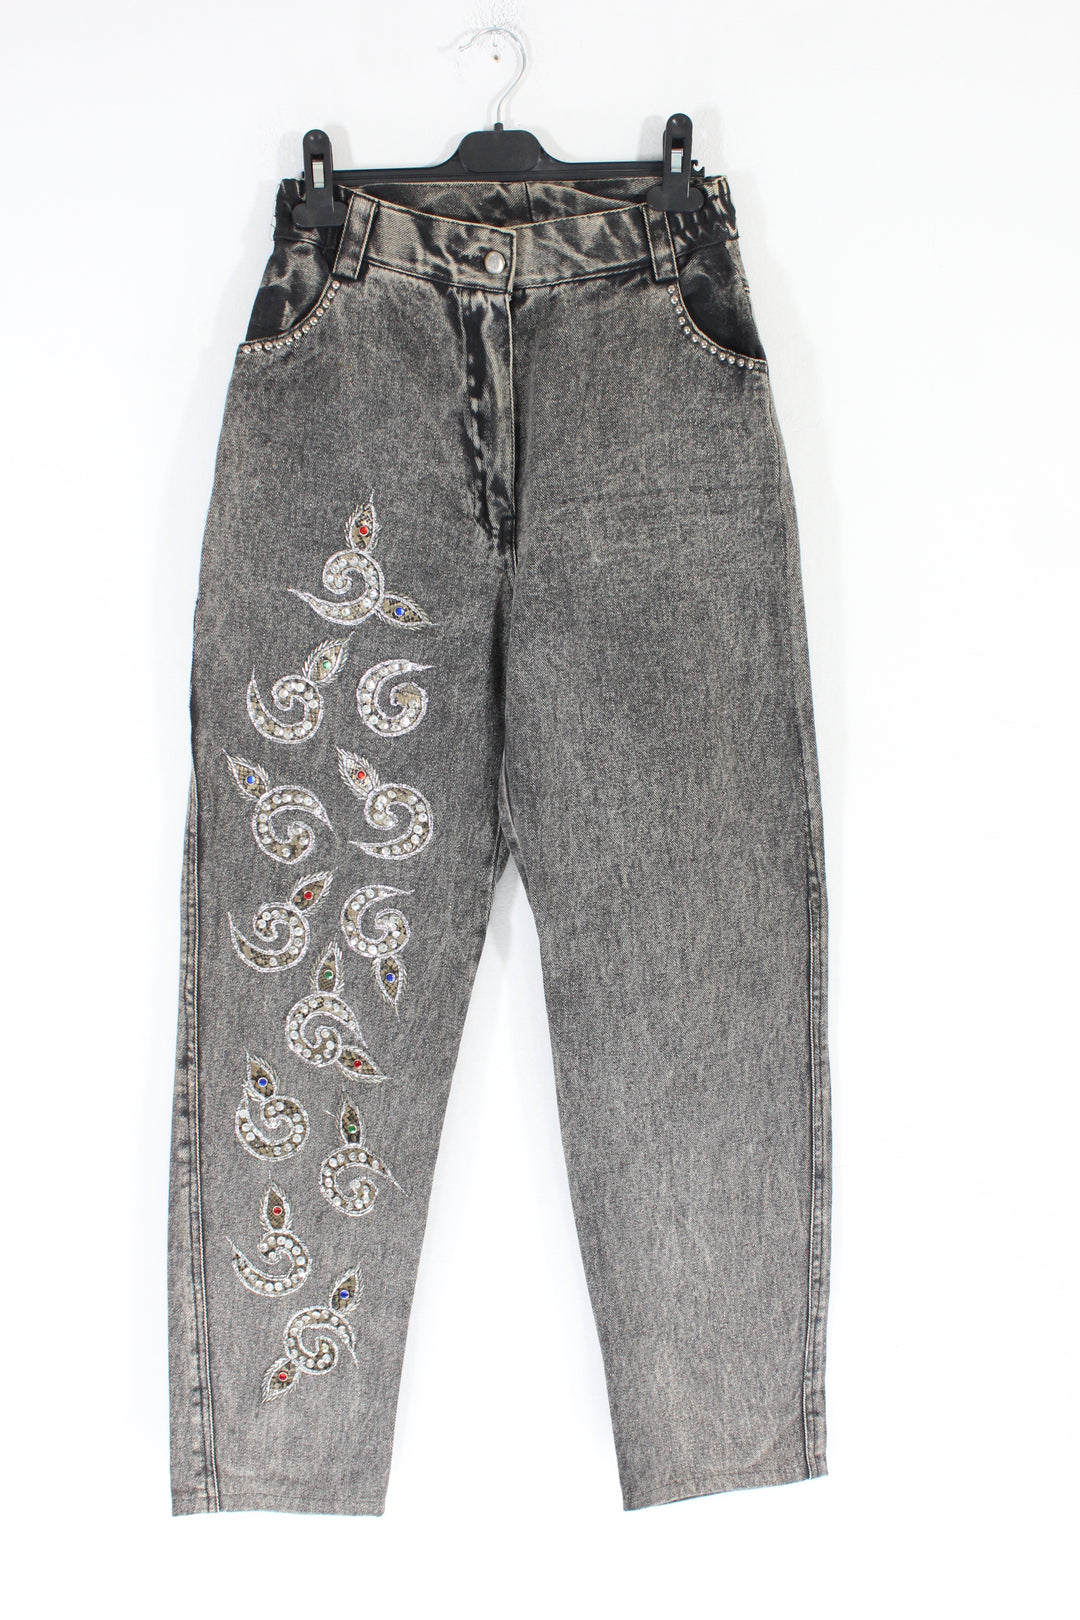 Vintage High Waisted Jeans Women's Medium(36)